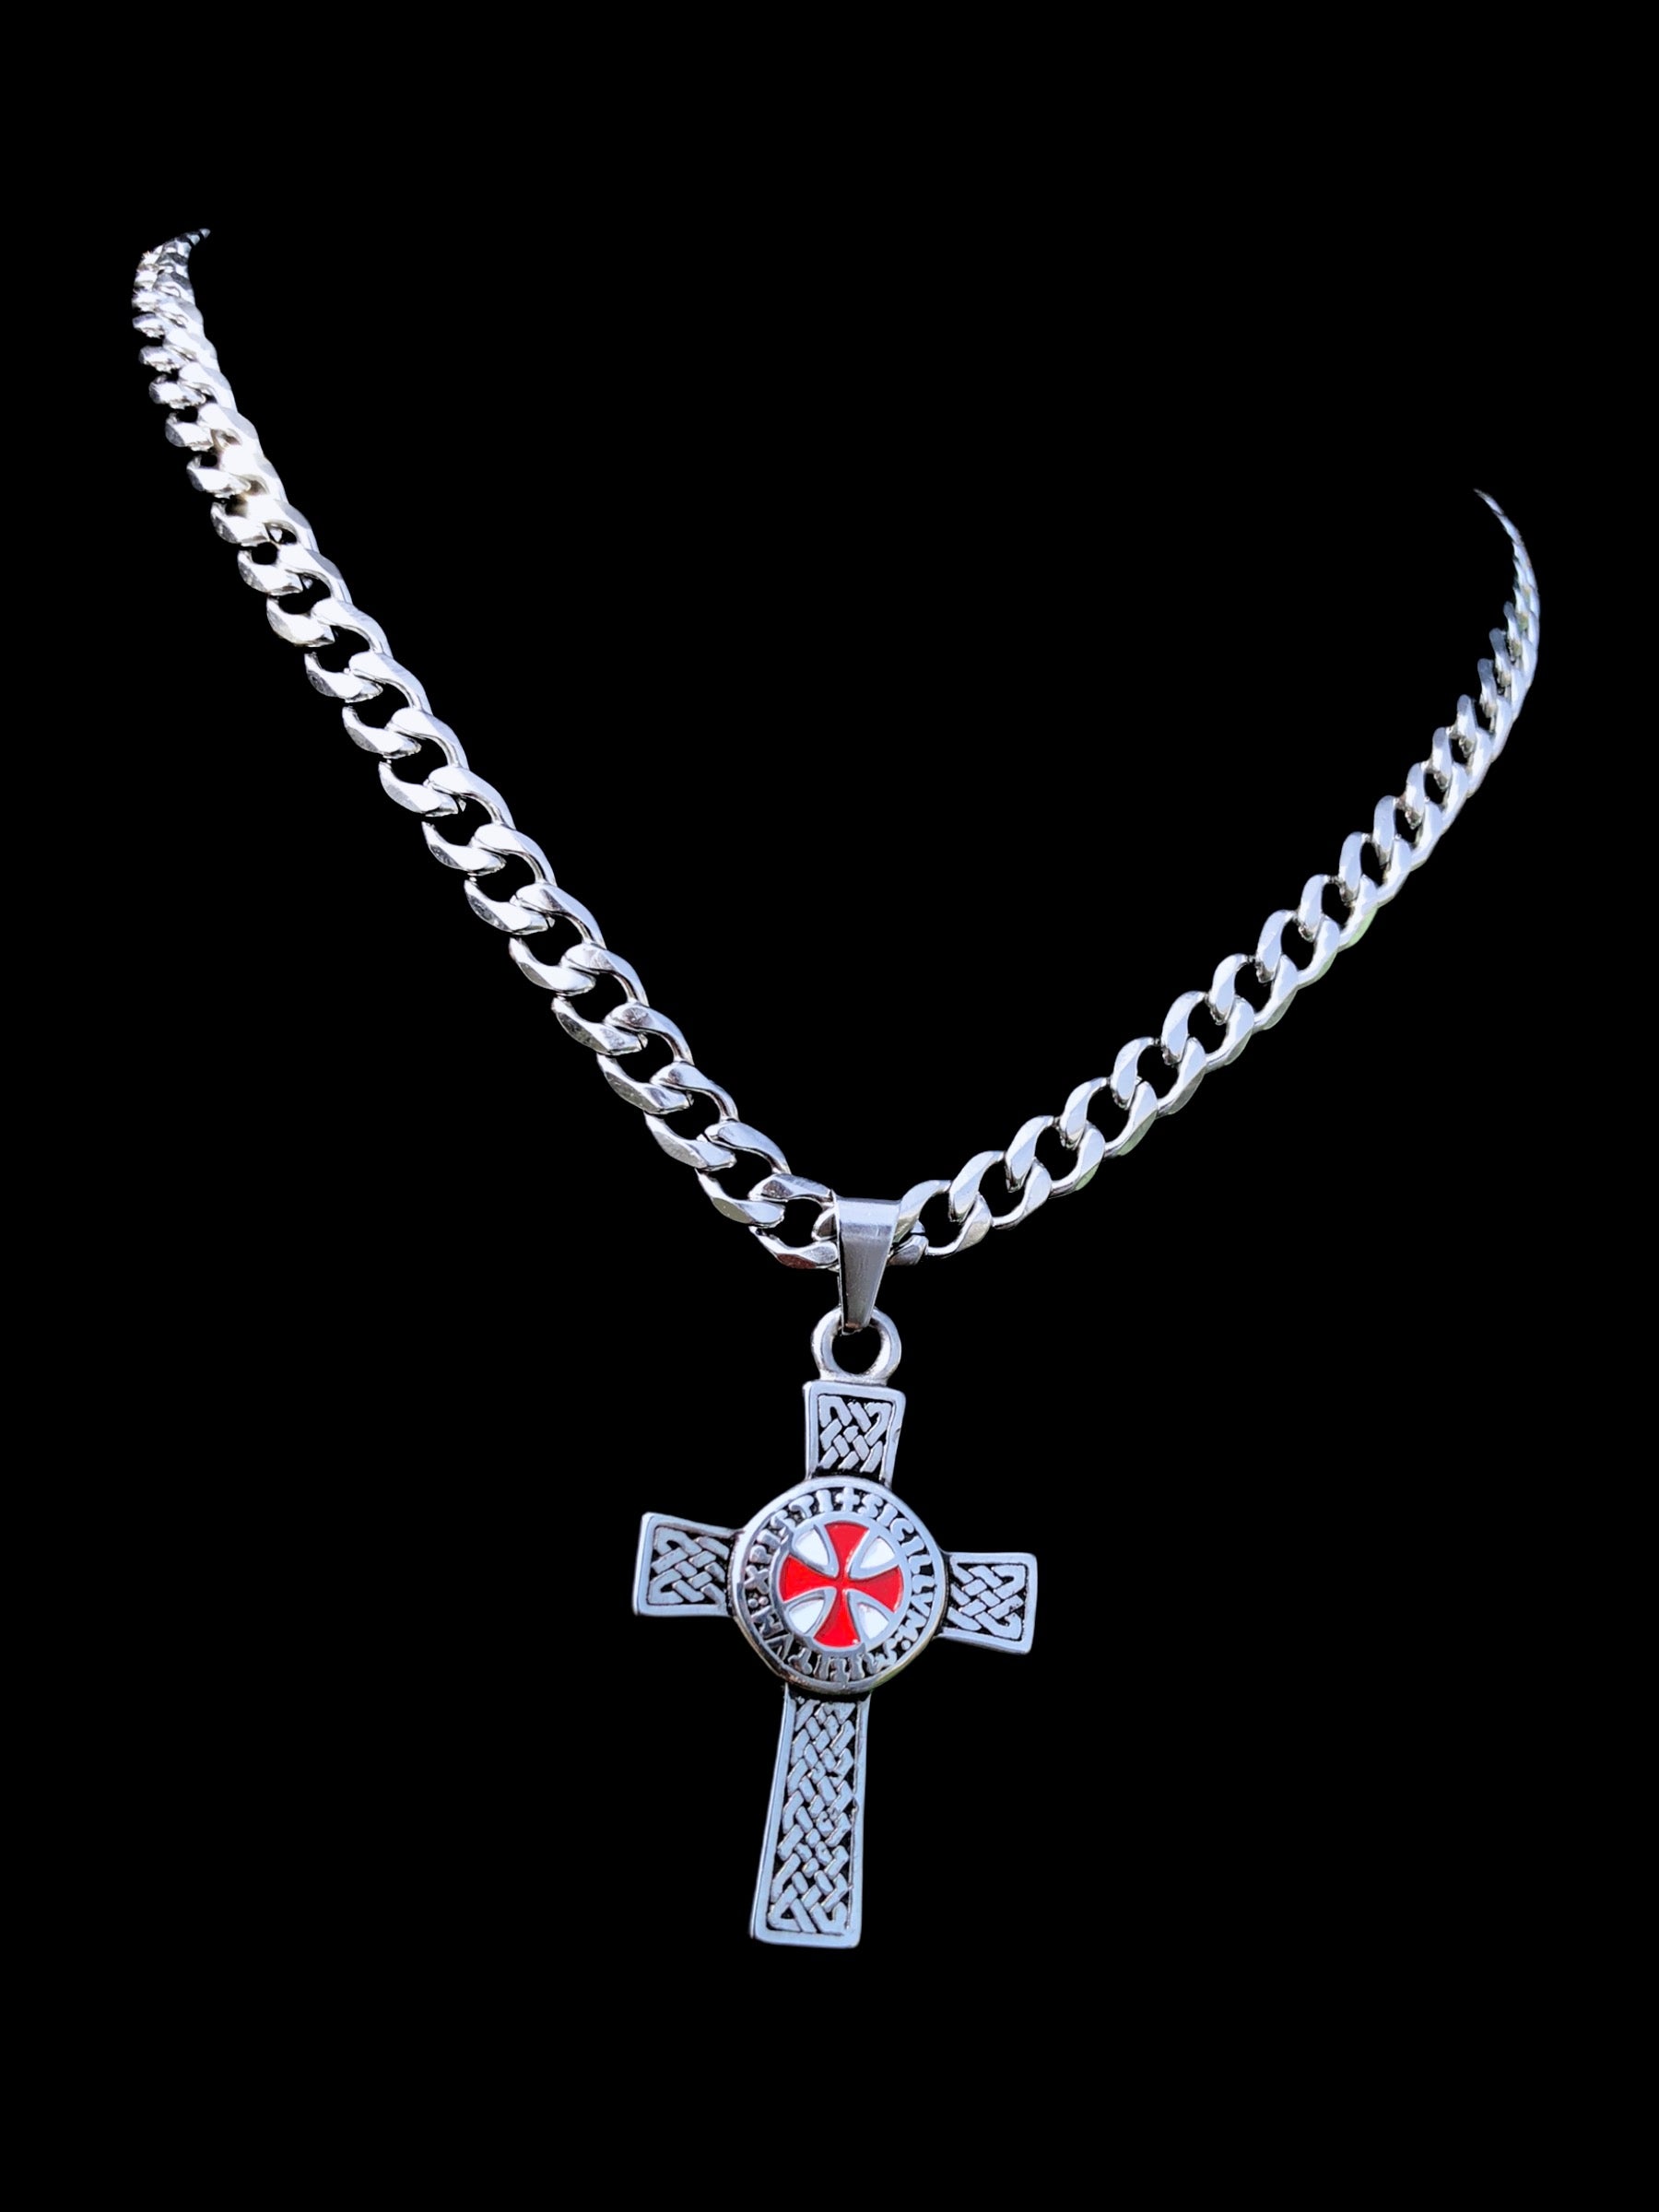 Zysta Bundle – 2 items ： Knights Templar Cross Necklace, Silver Cross Pray  Necklace for Men Women | Amazon.com